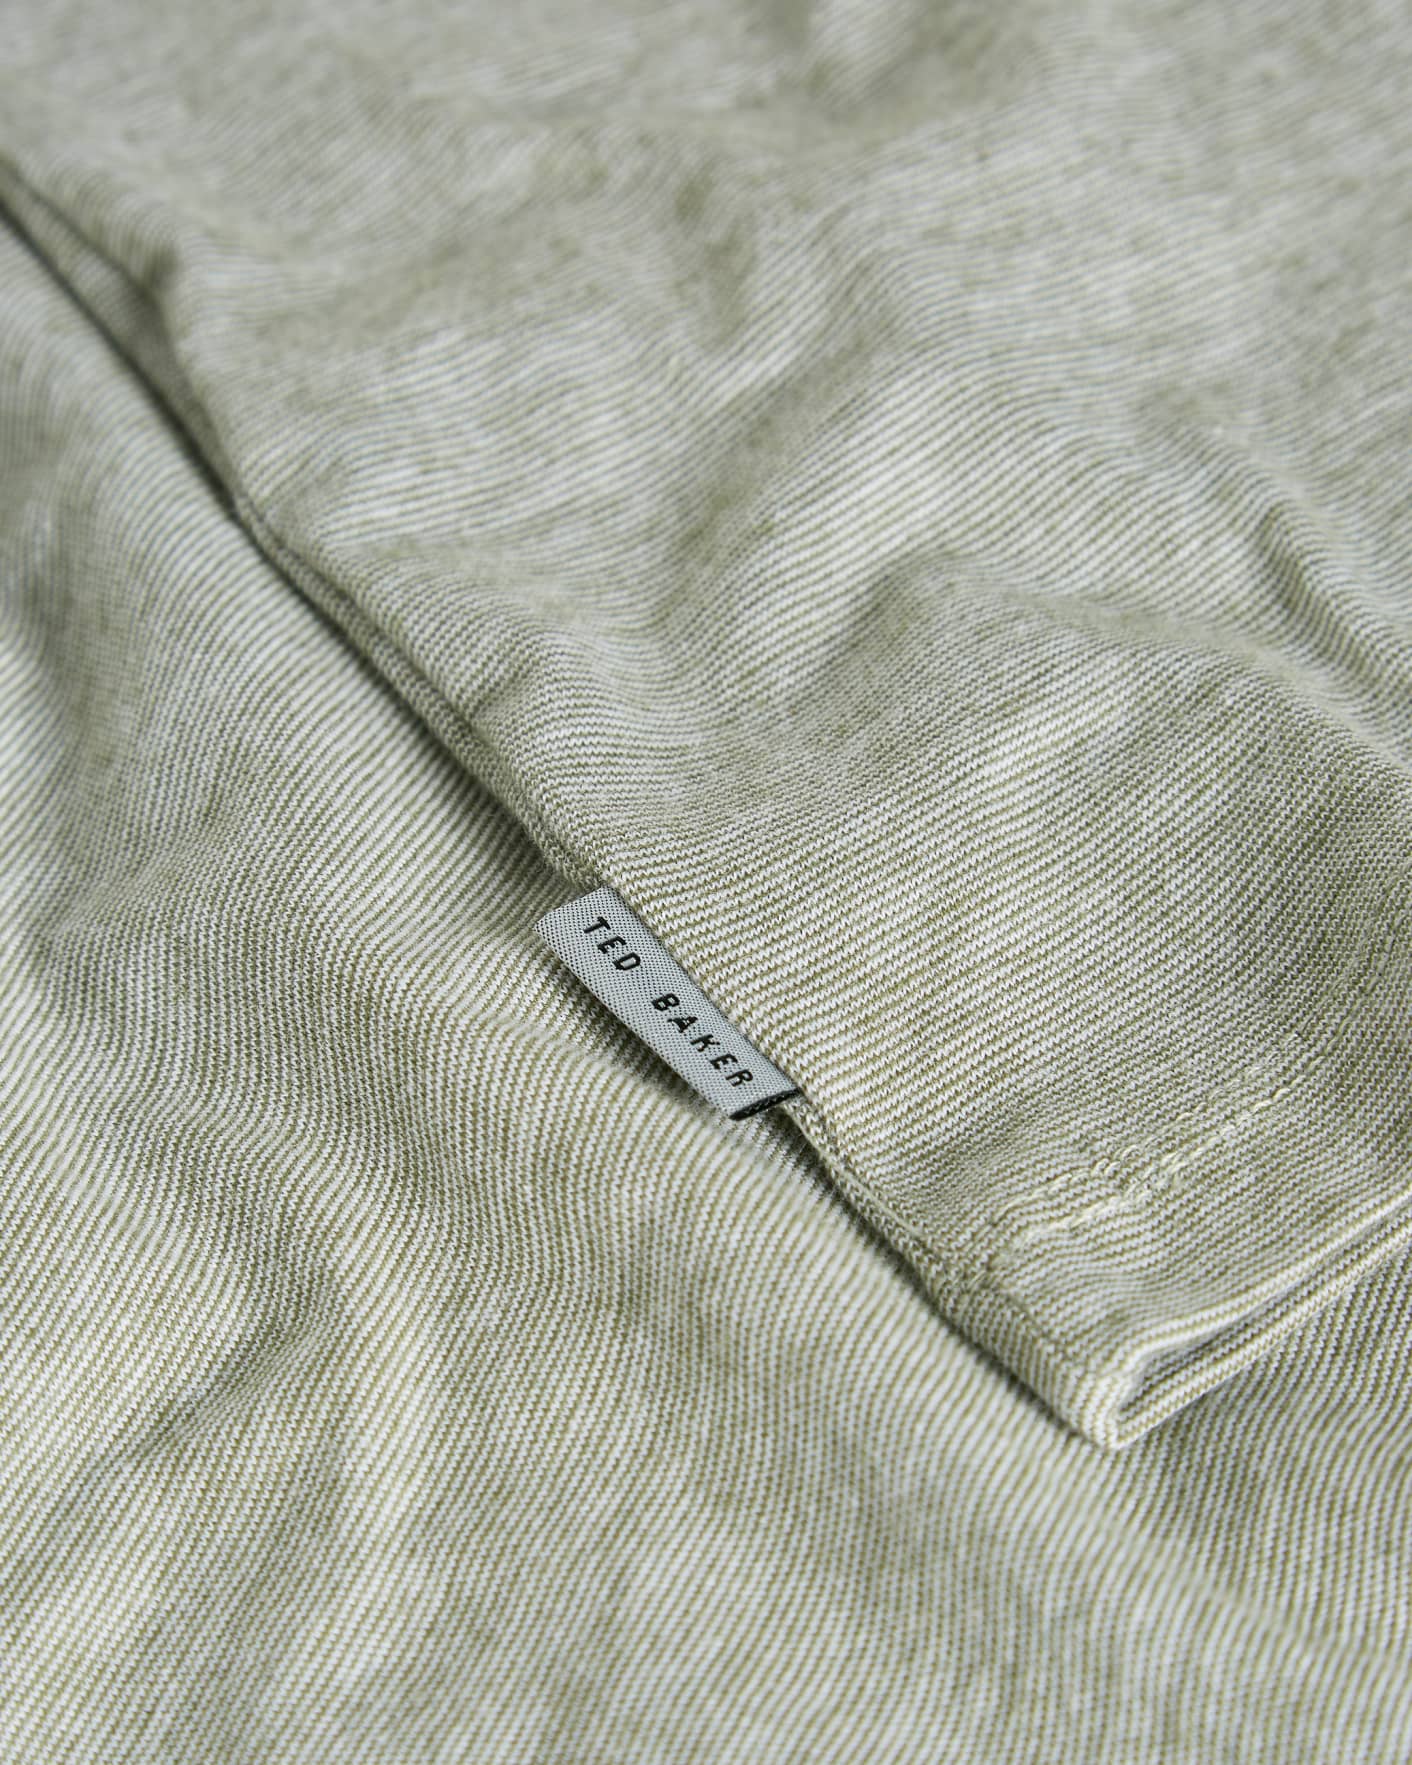 Khaki Woven Collar 1x1 Stripe Short Sleeve Polo Ted Baker